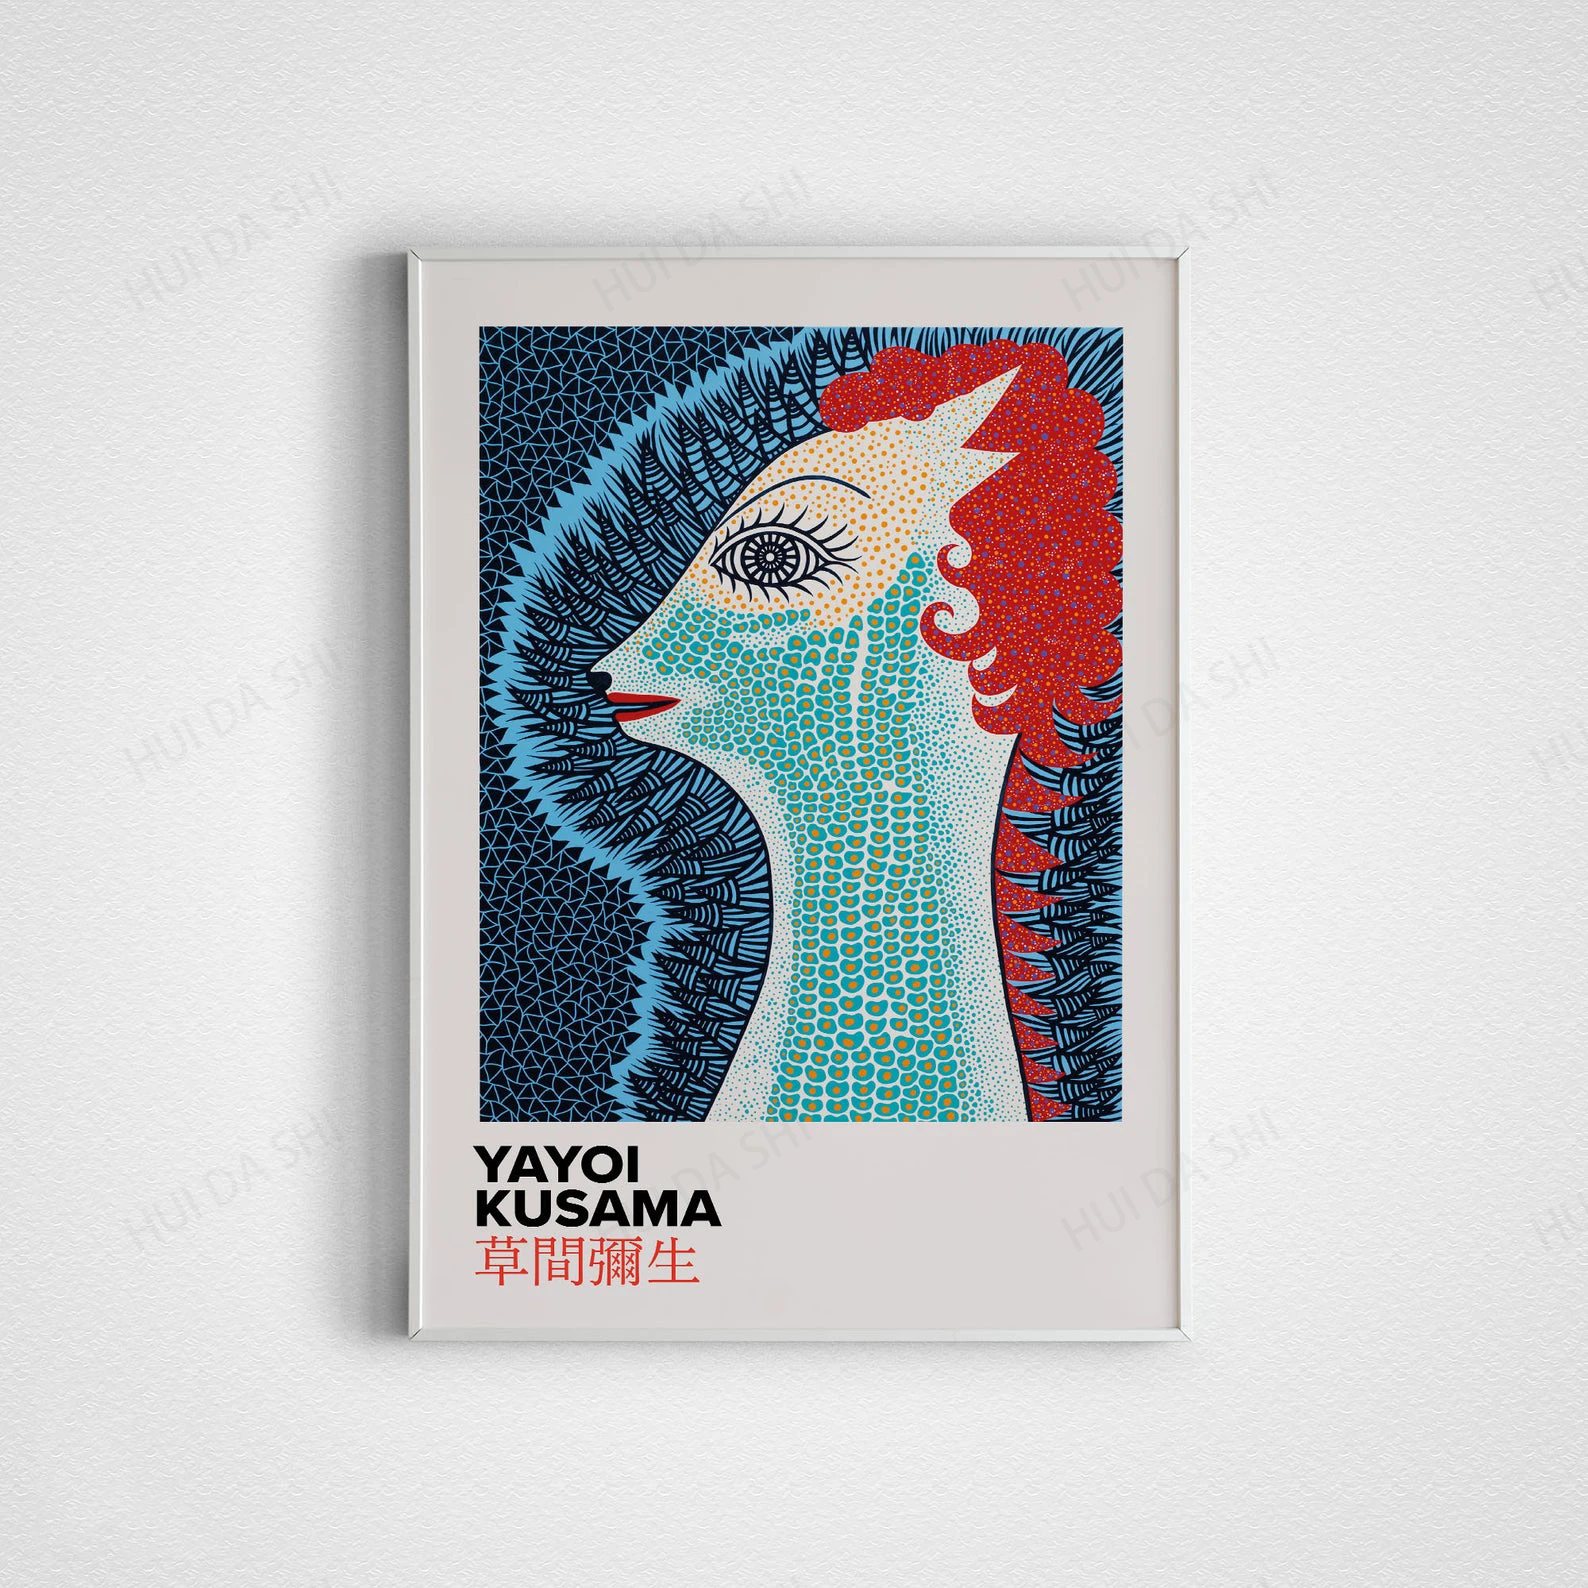 Mand Sneeuwstorm maagpijn Yayoi Kusama Tentoonstelling Replica Poster, Zelfportret Tobblo 2010,  japanse Moderne Kunst Illustratie Moderne Art Print Home Decor|Schilderij &  Schoonschrift| - AliExpress